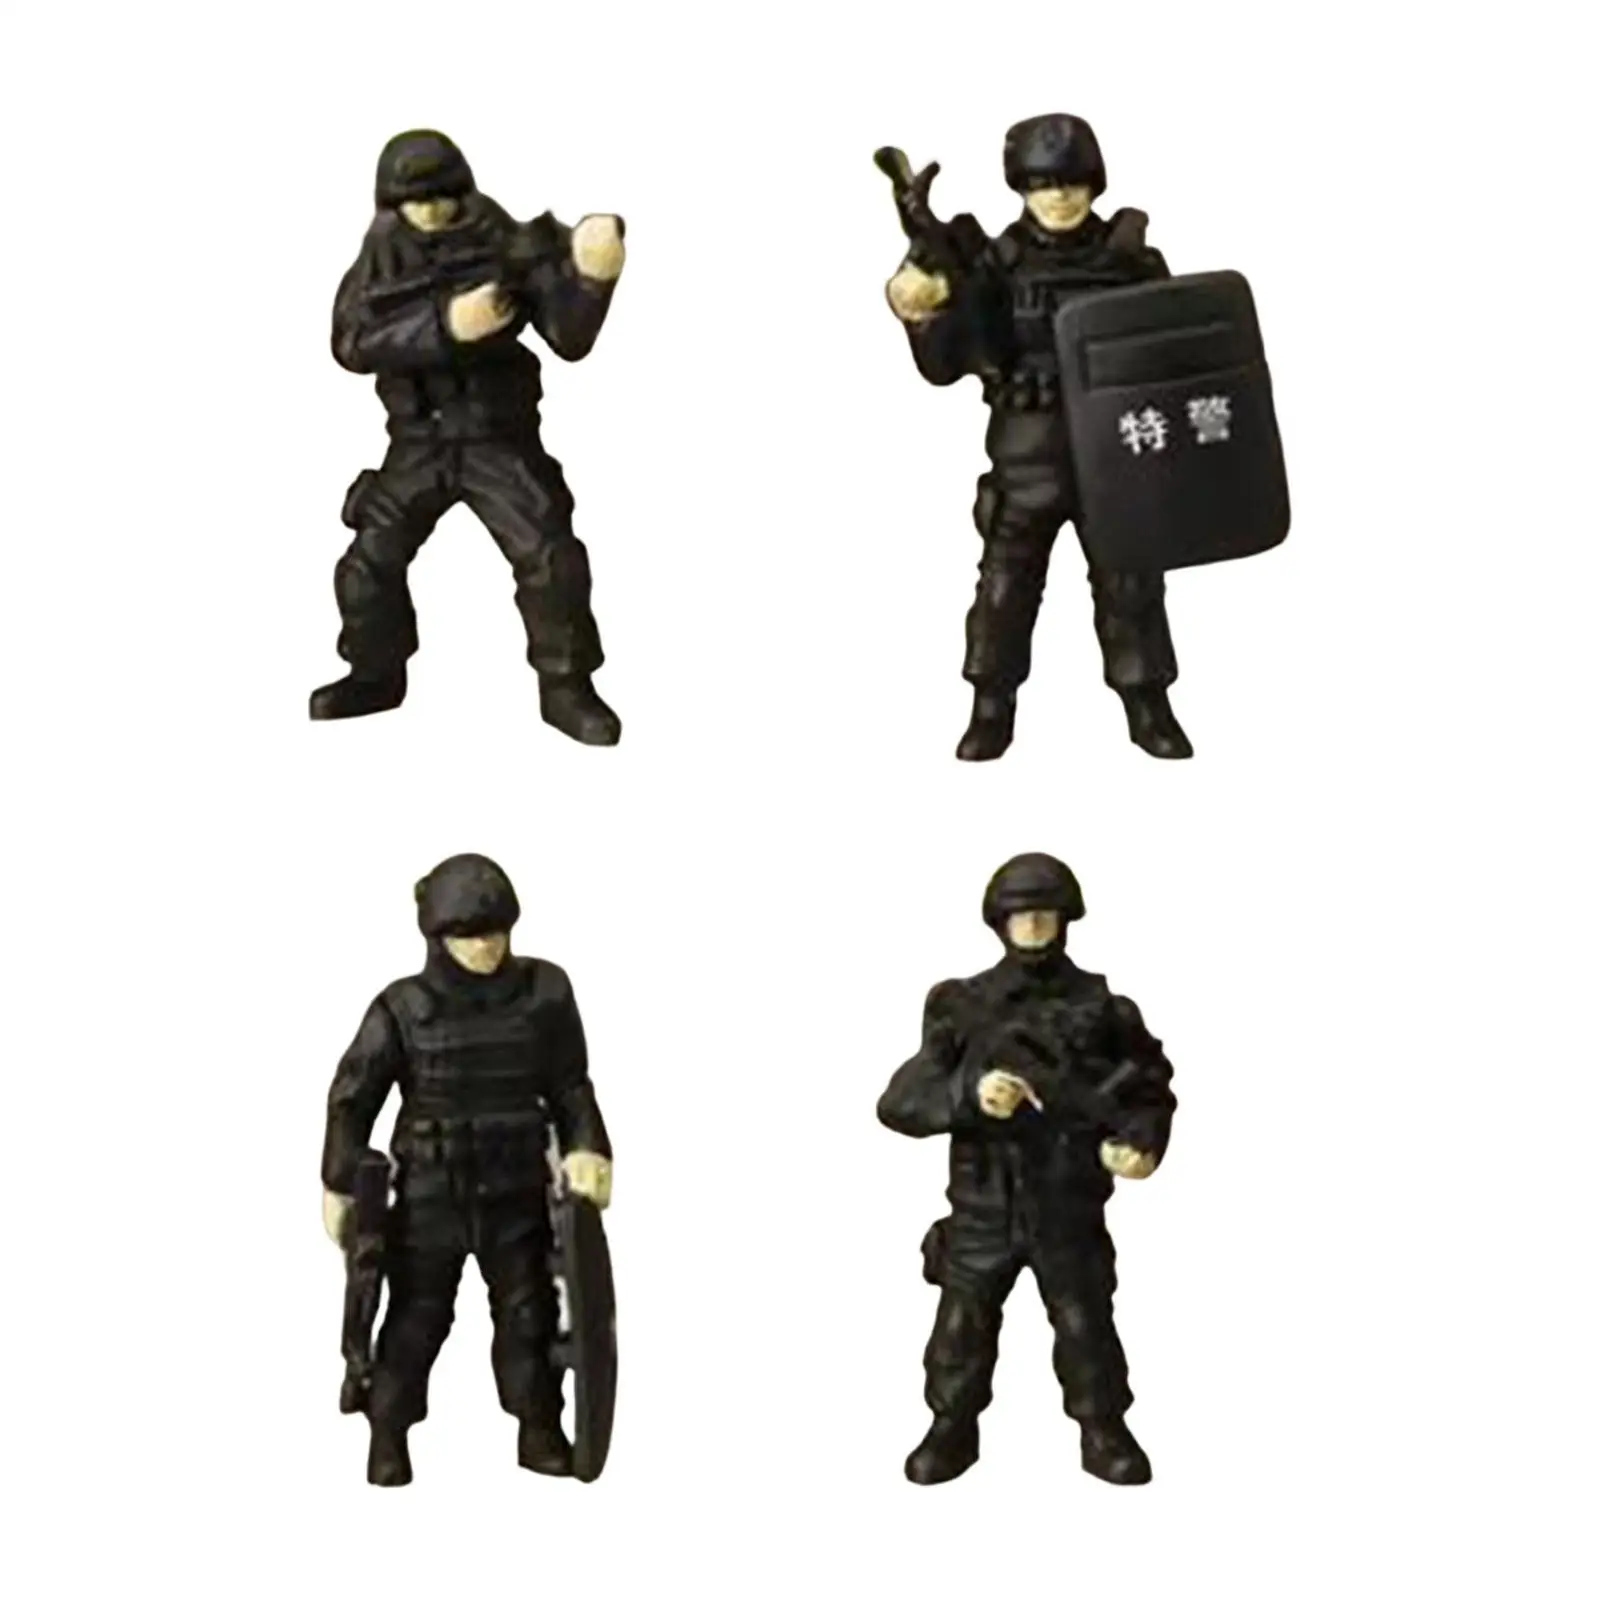 4Pcs 1/64 Miniature Figure Special Forces Model Figures Different Poses Diorama Model for Desktop Ornament DIY Projects S Gauge